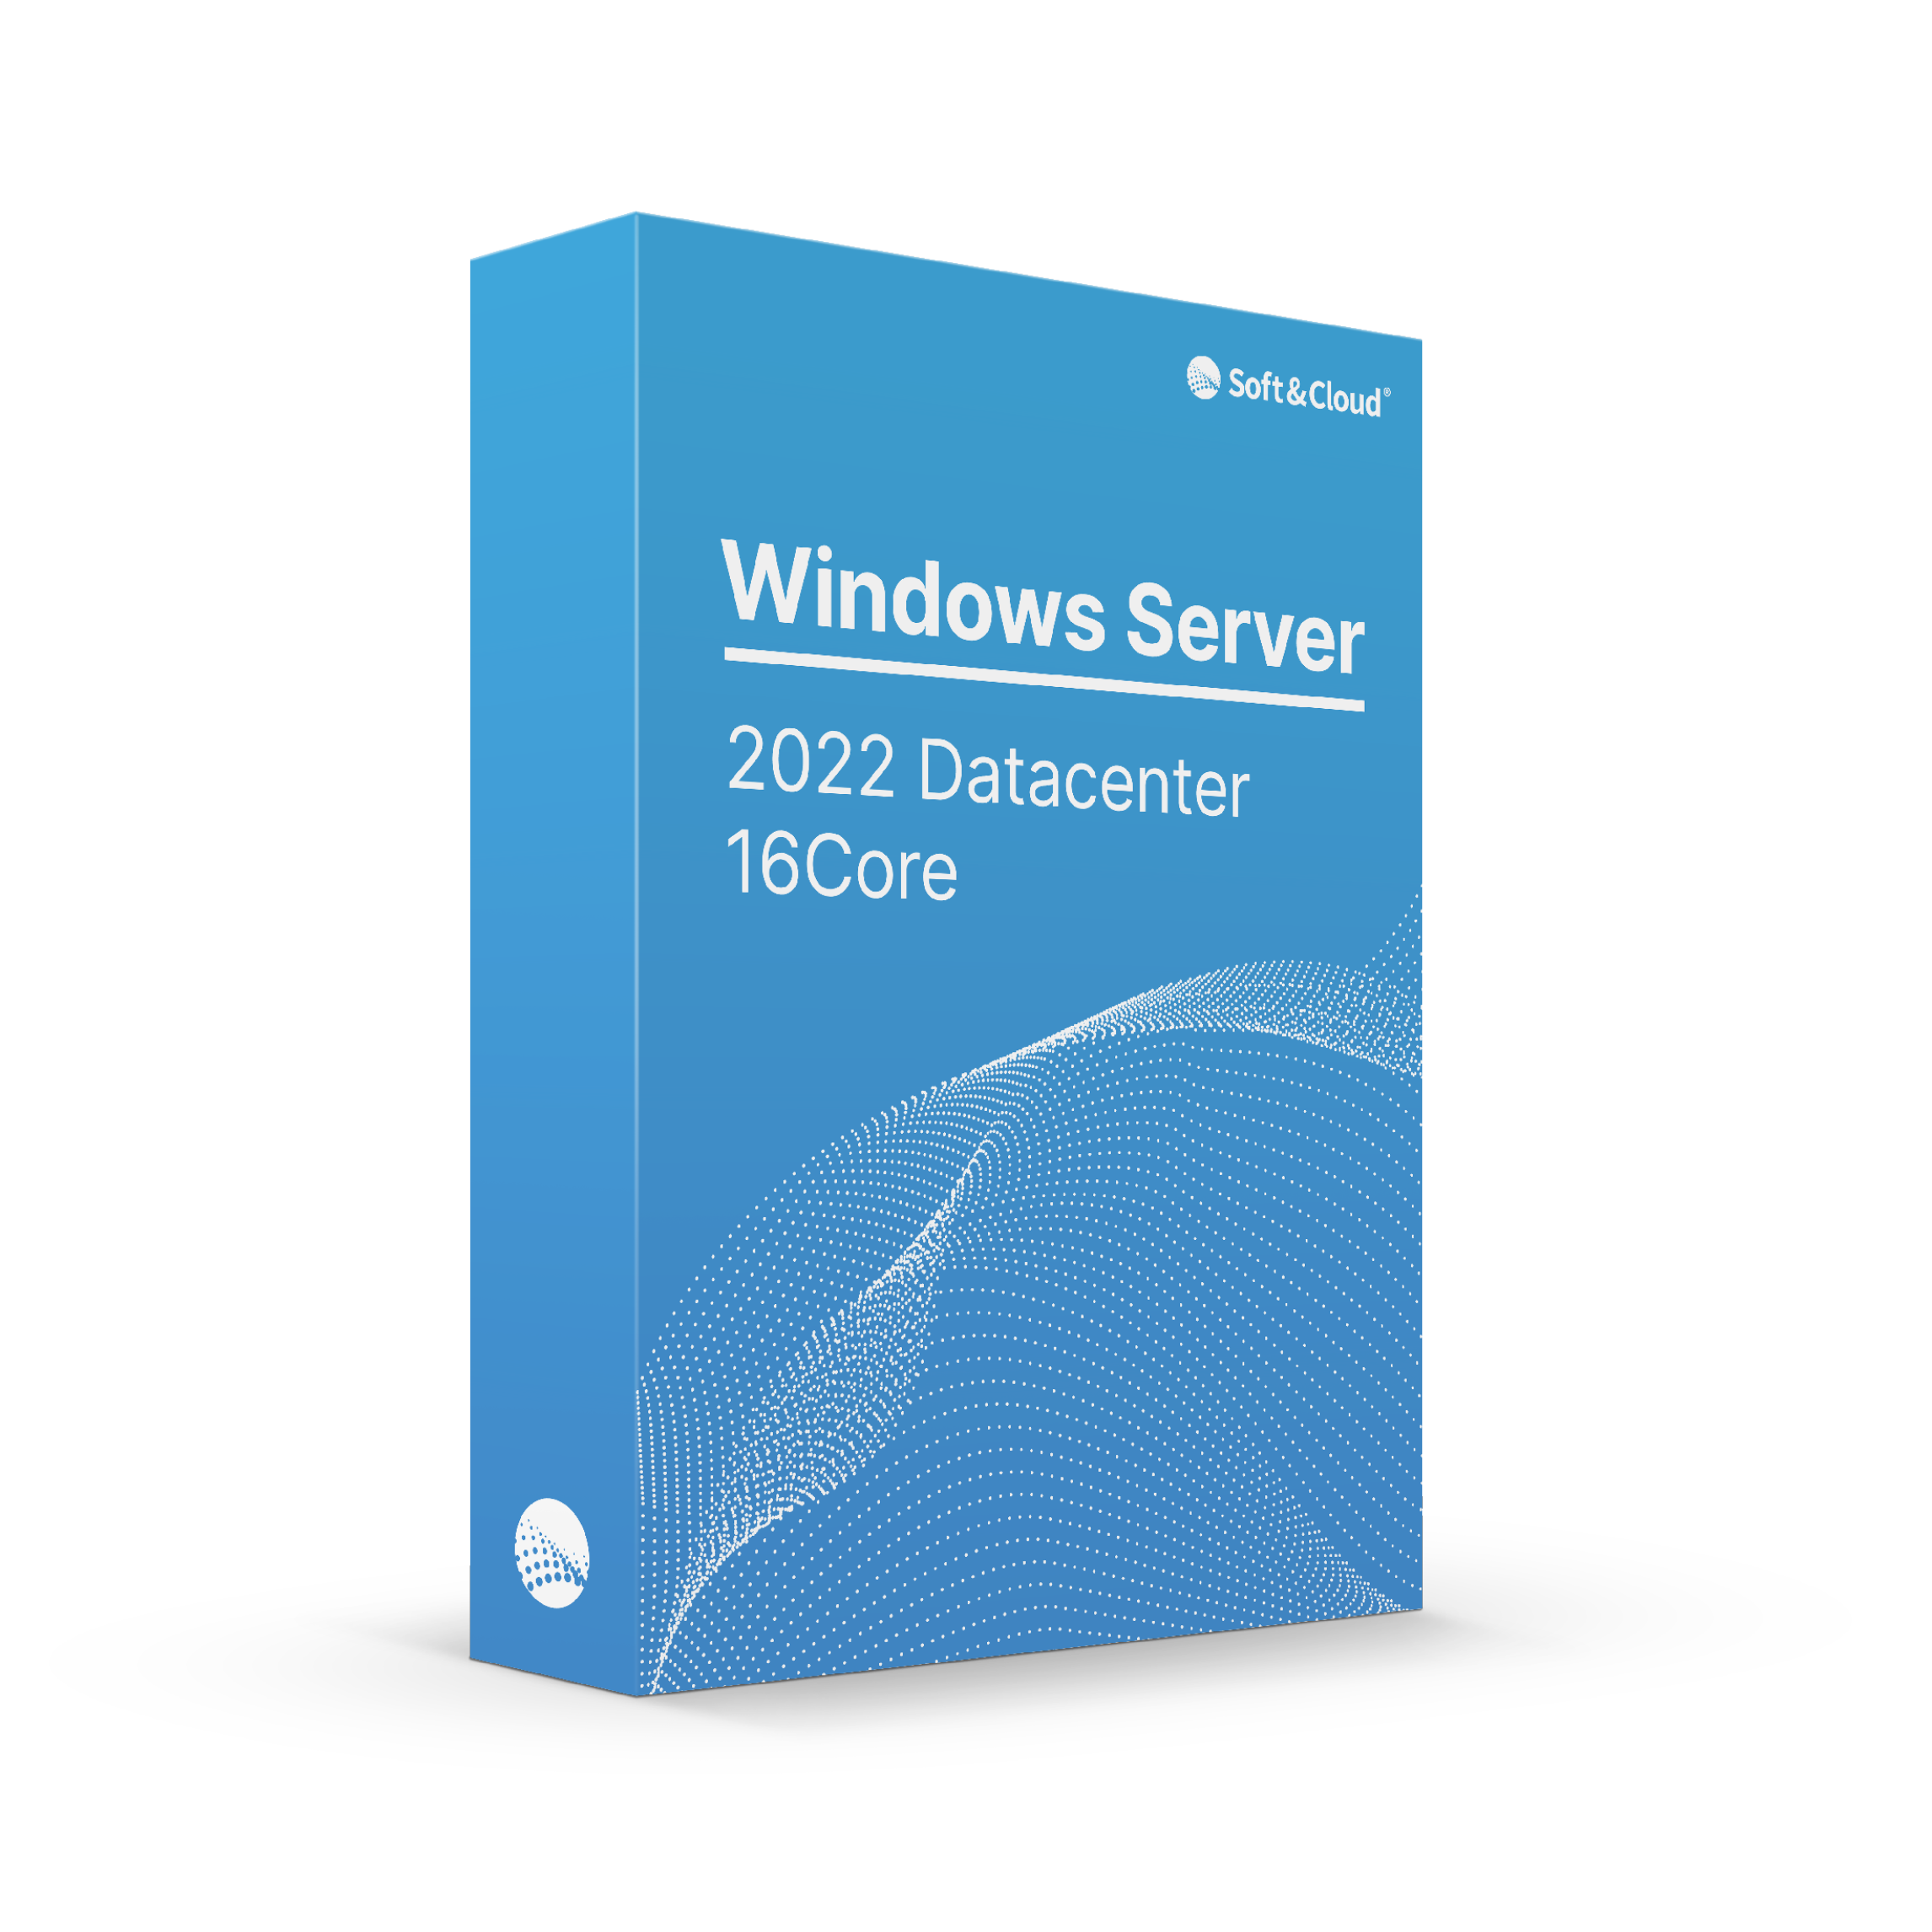 Windows Server 2022 Datacenter 16Core